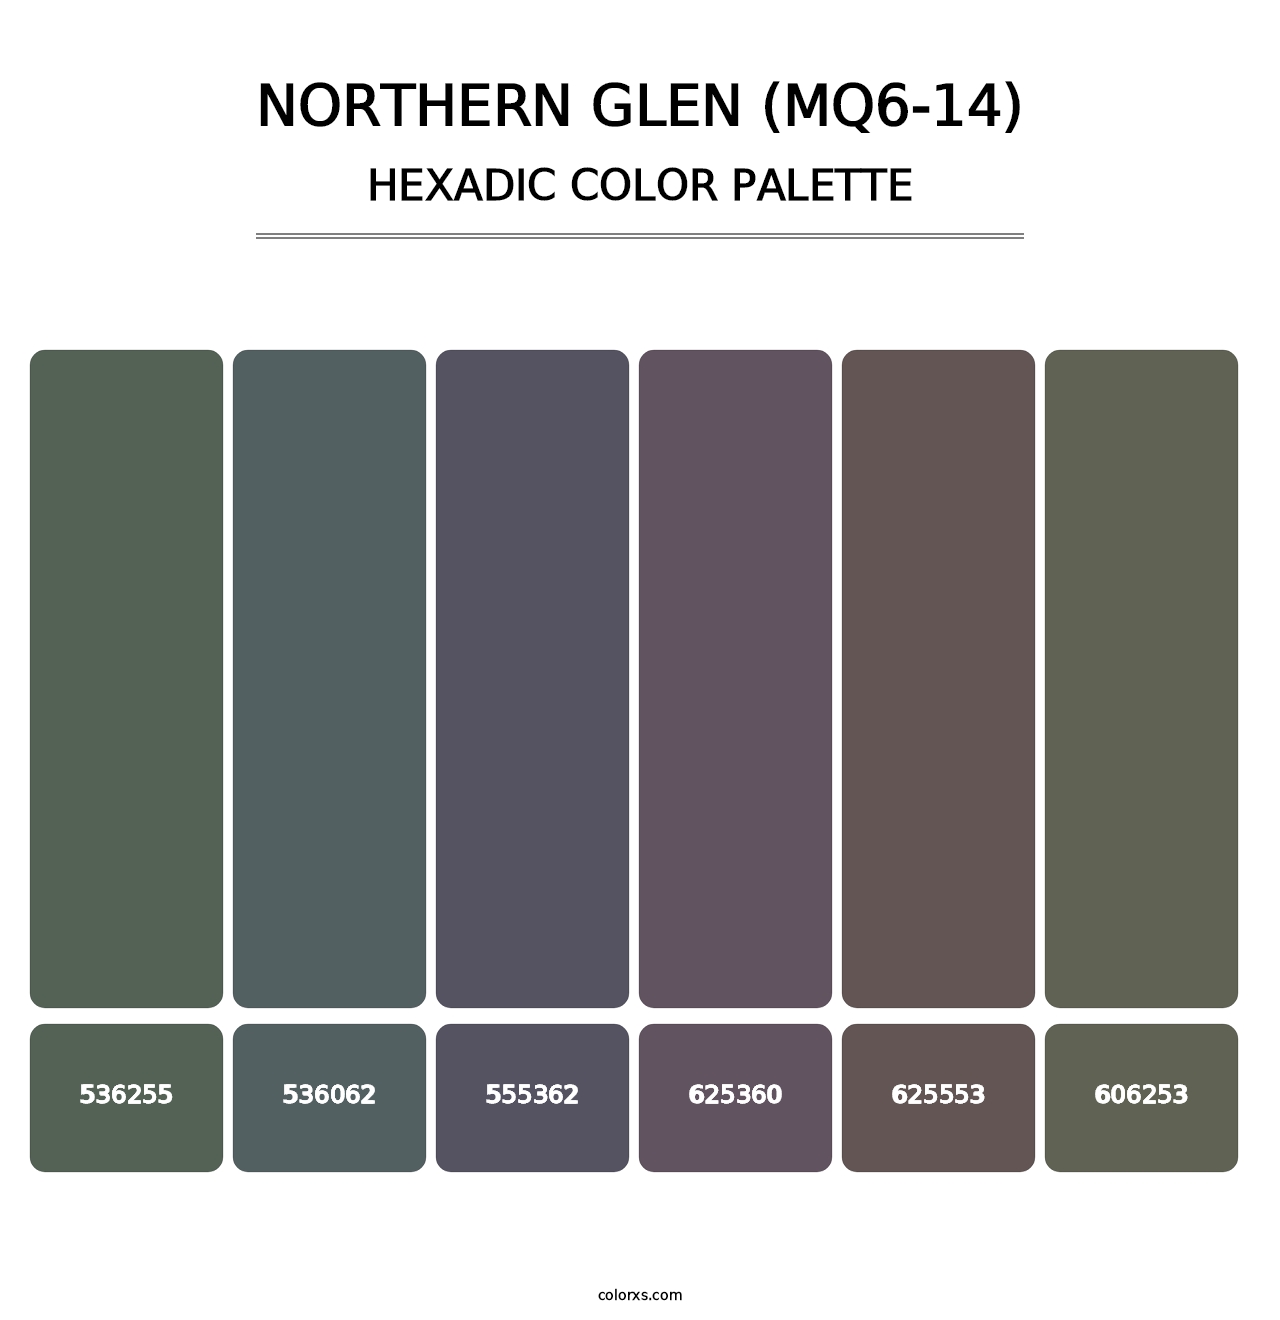 Northern Glen (MQ6-14) - Hexadic Color Palette